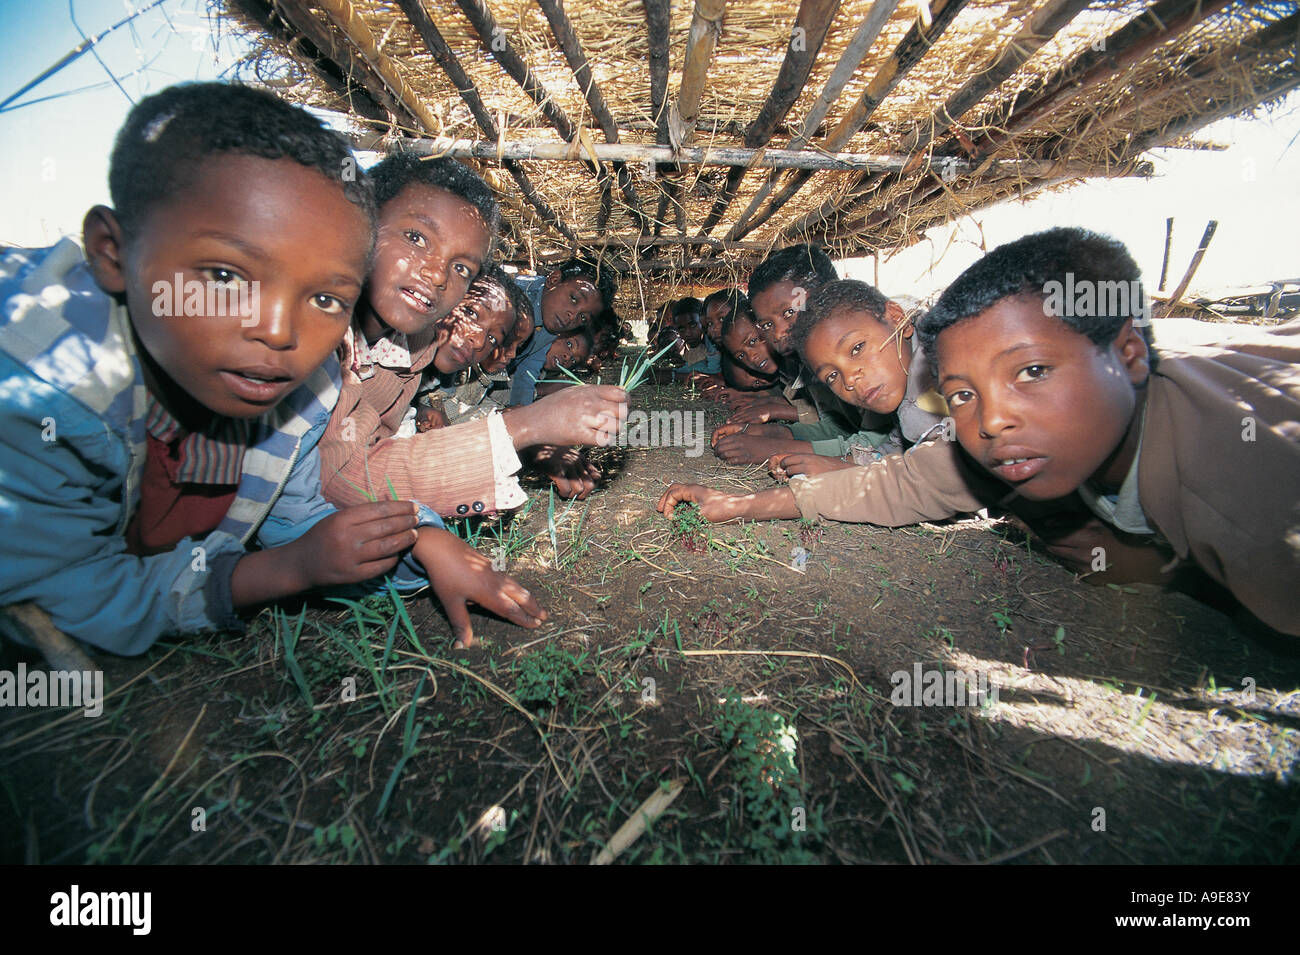 School nursery education program selling saplings for school book money Ginchi Ethiopia Stock Photo